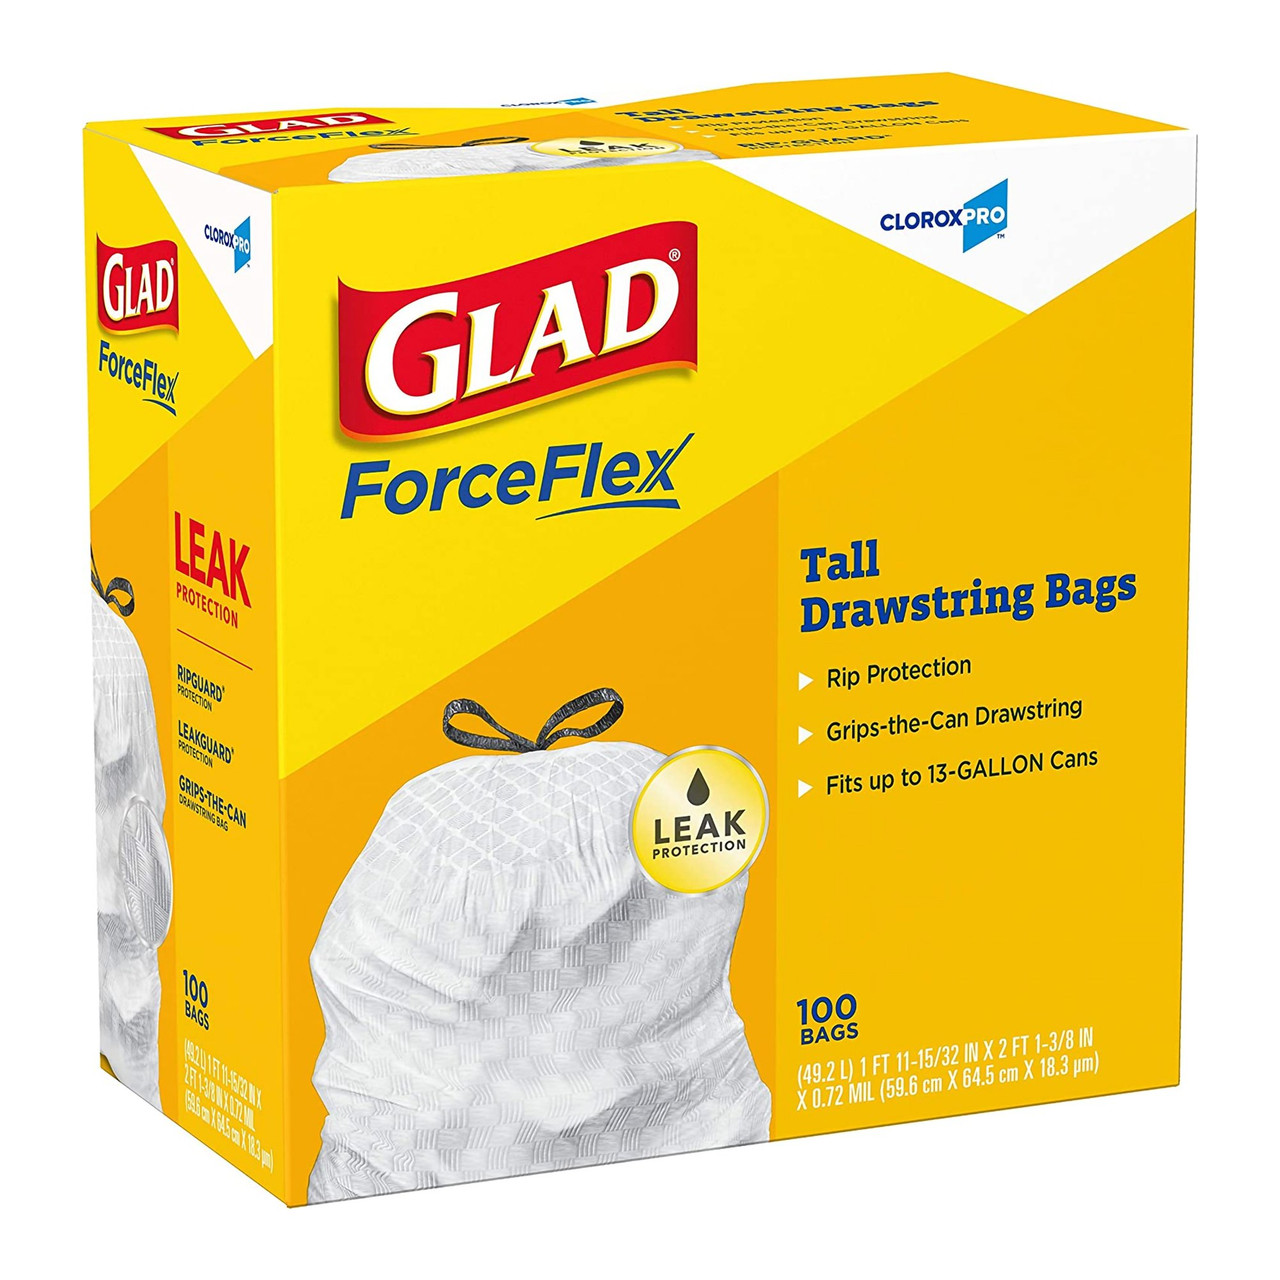 Glad Forceflex Drawstring Trash Bags - Pinesol - 13 Gallon - 50ct